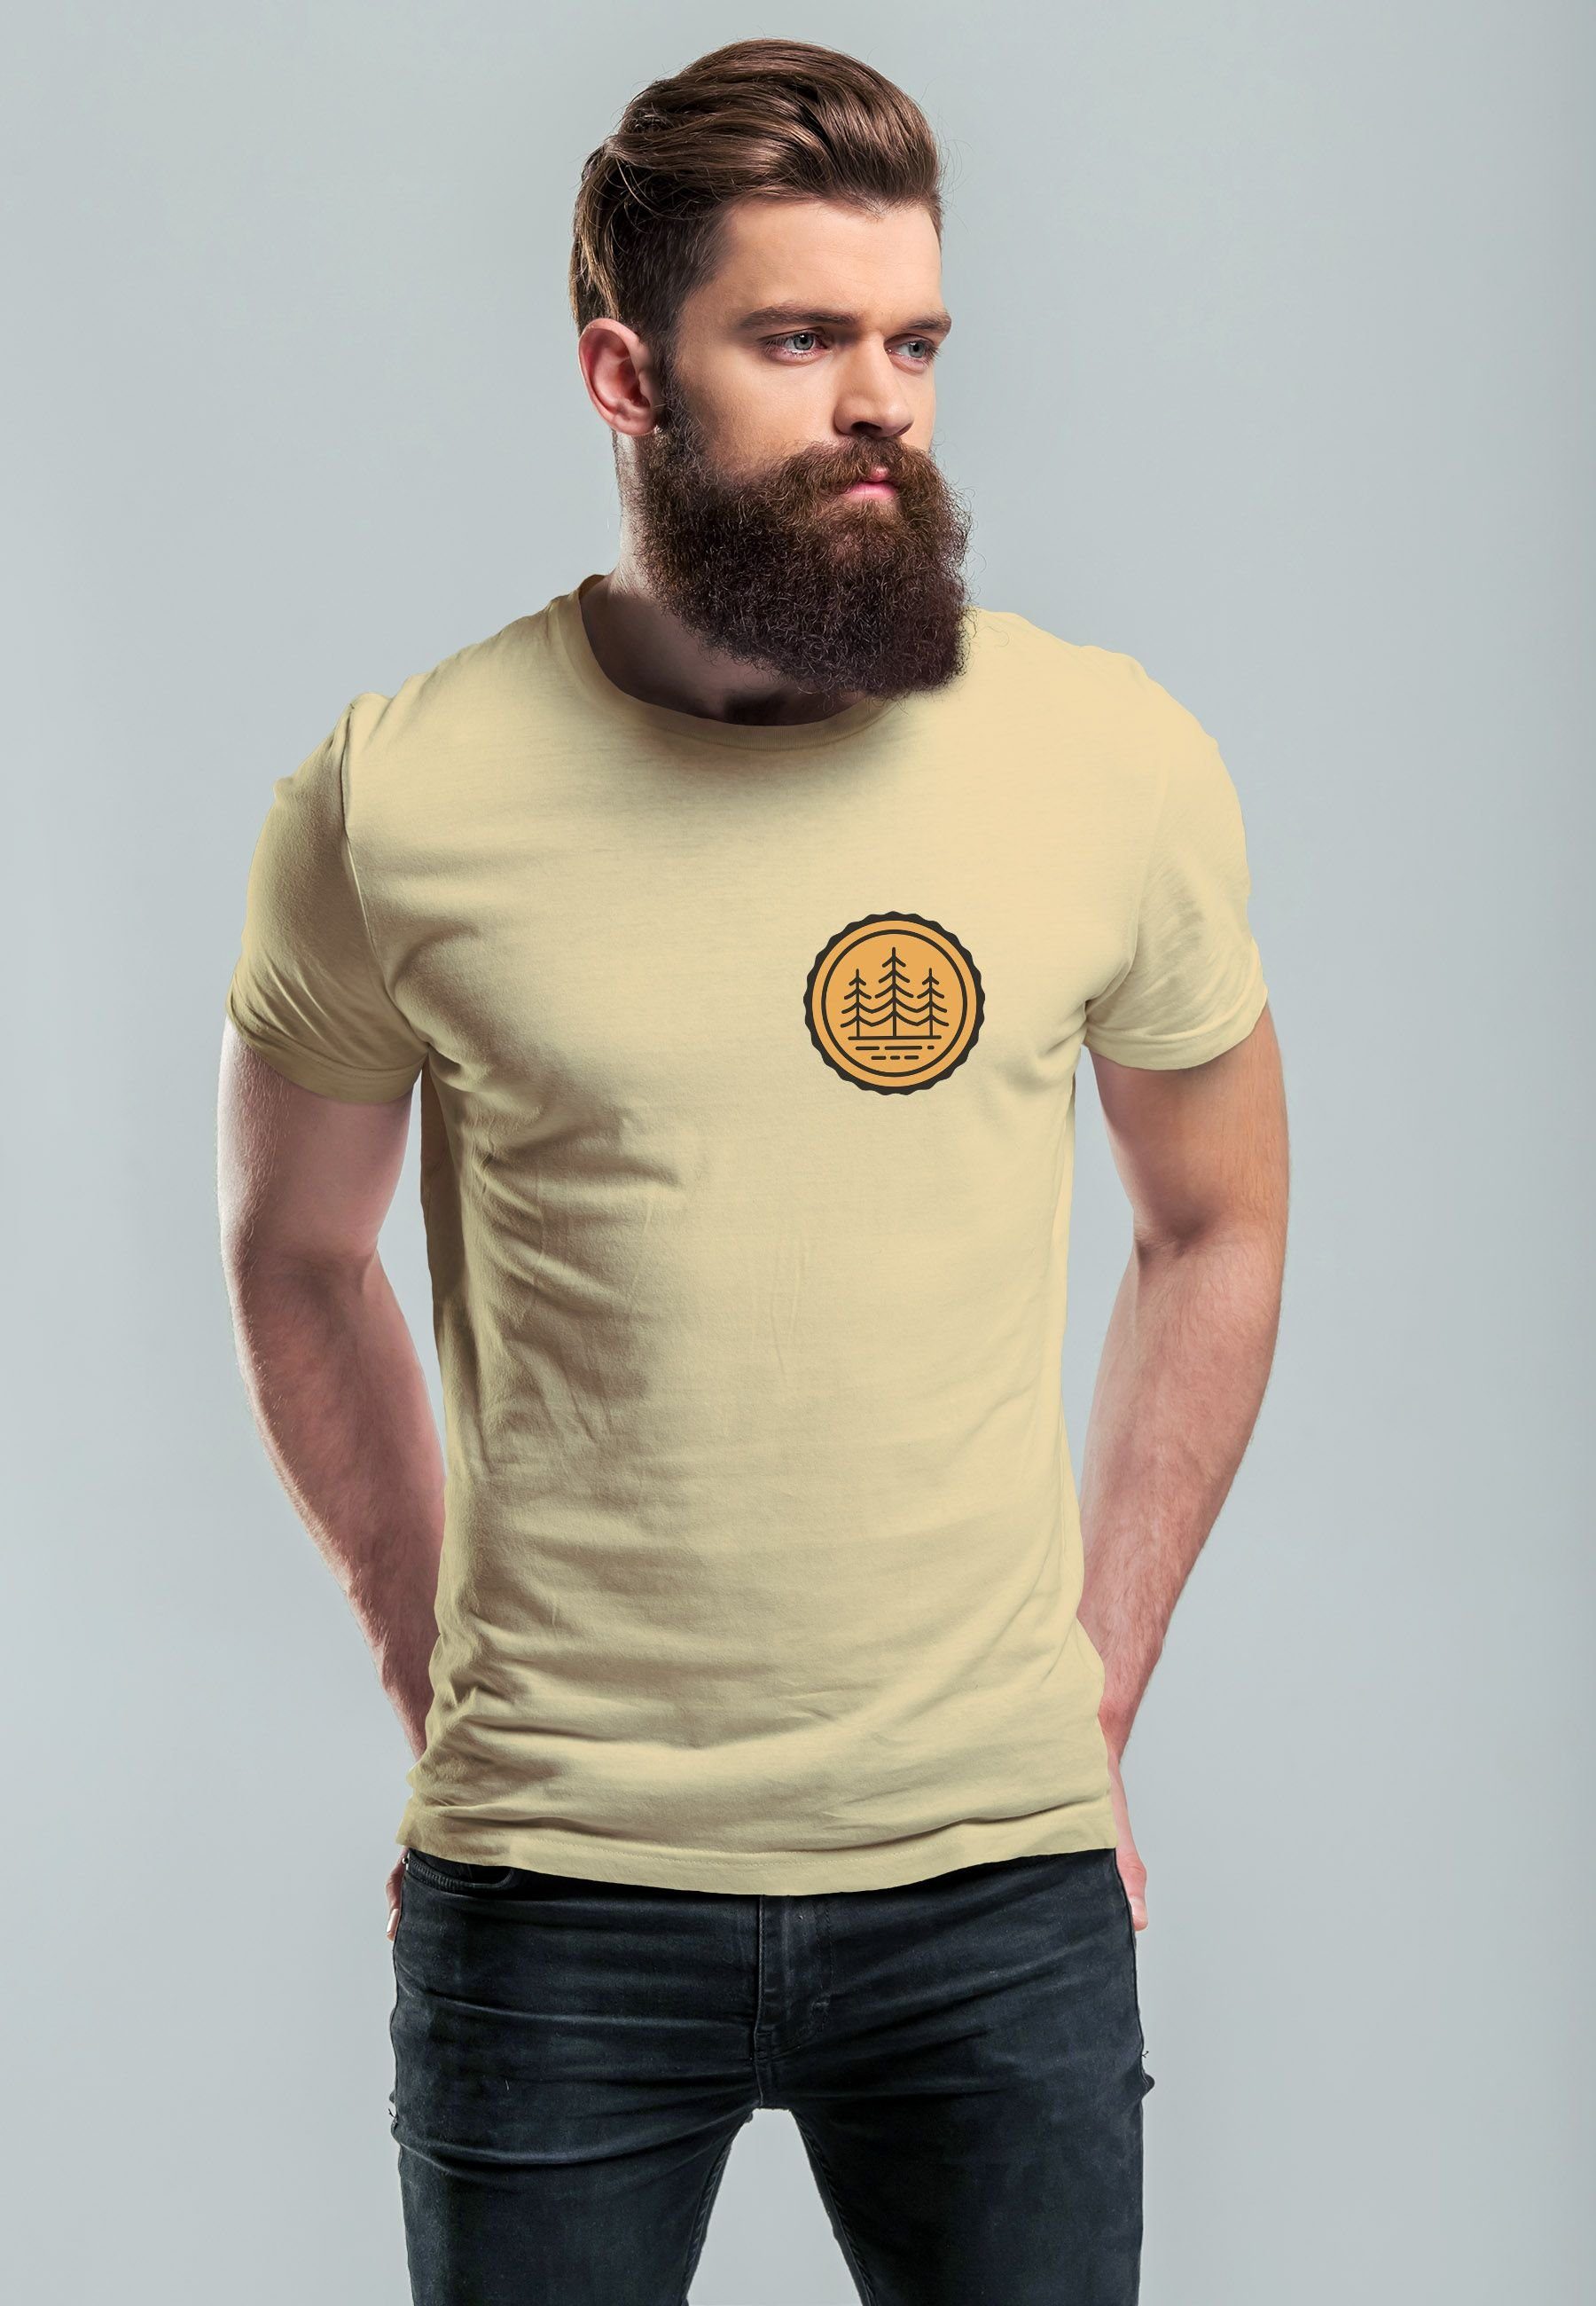 Wald Outdoor mit T-Shirt Print-Shirt Herren St Logo Bäume Print Badge Naturliebhaber Neverless Fashion